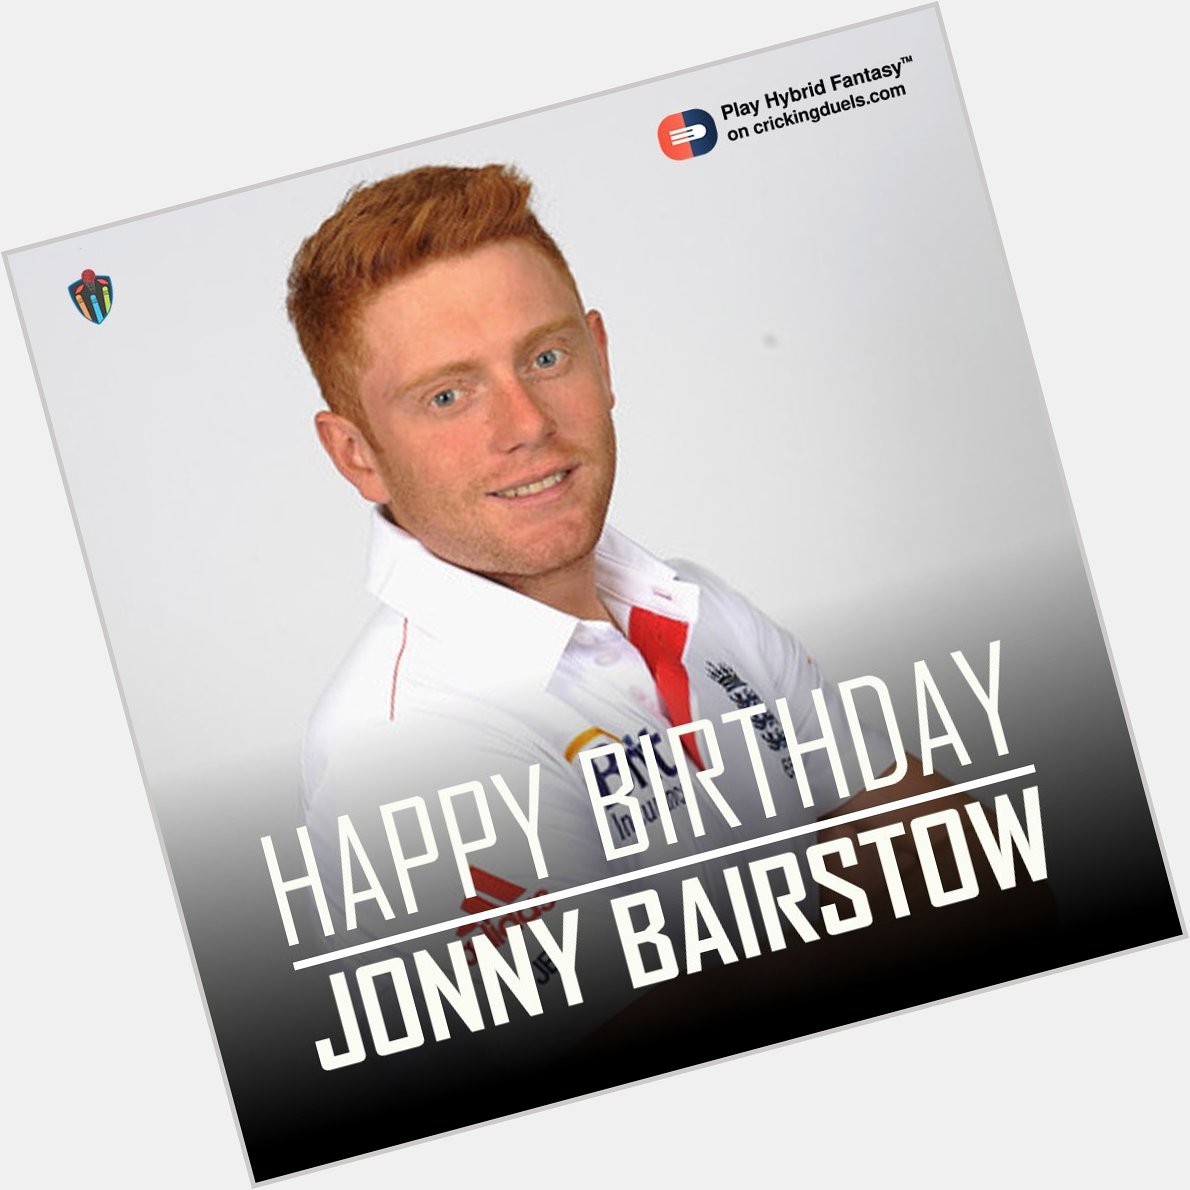 Happy Birthday, Jonny Bairstow. The English cricketer turns 28 today. 